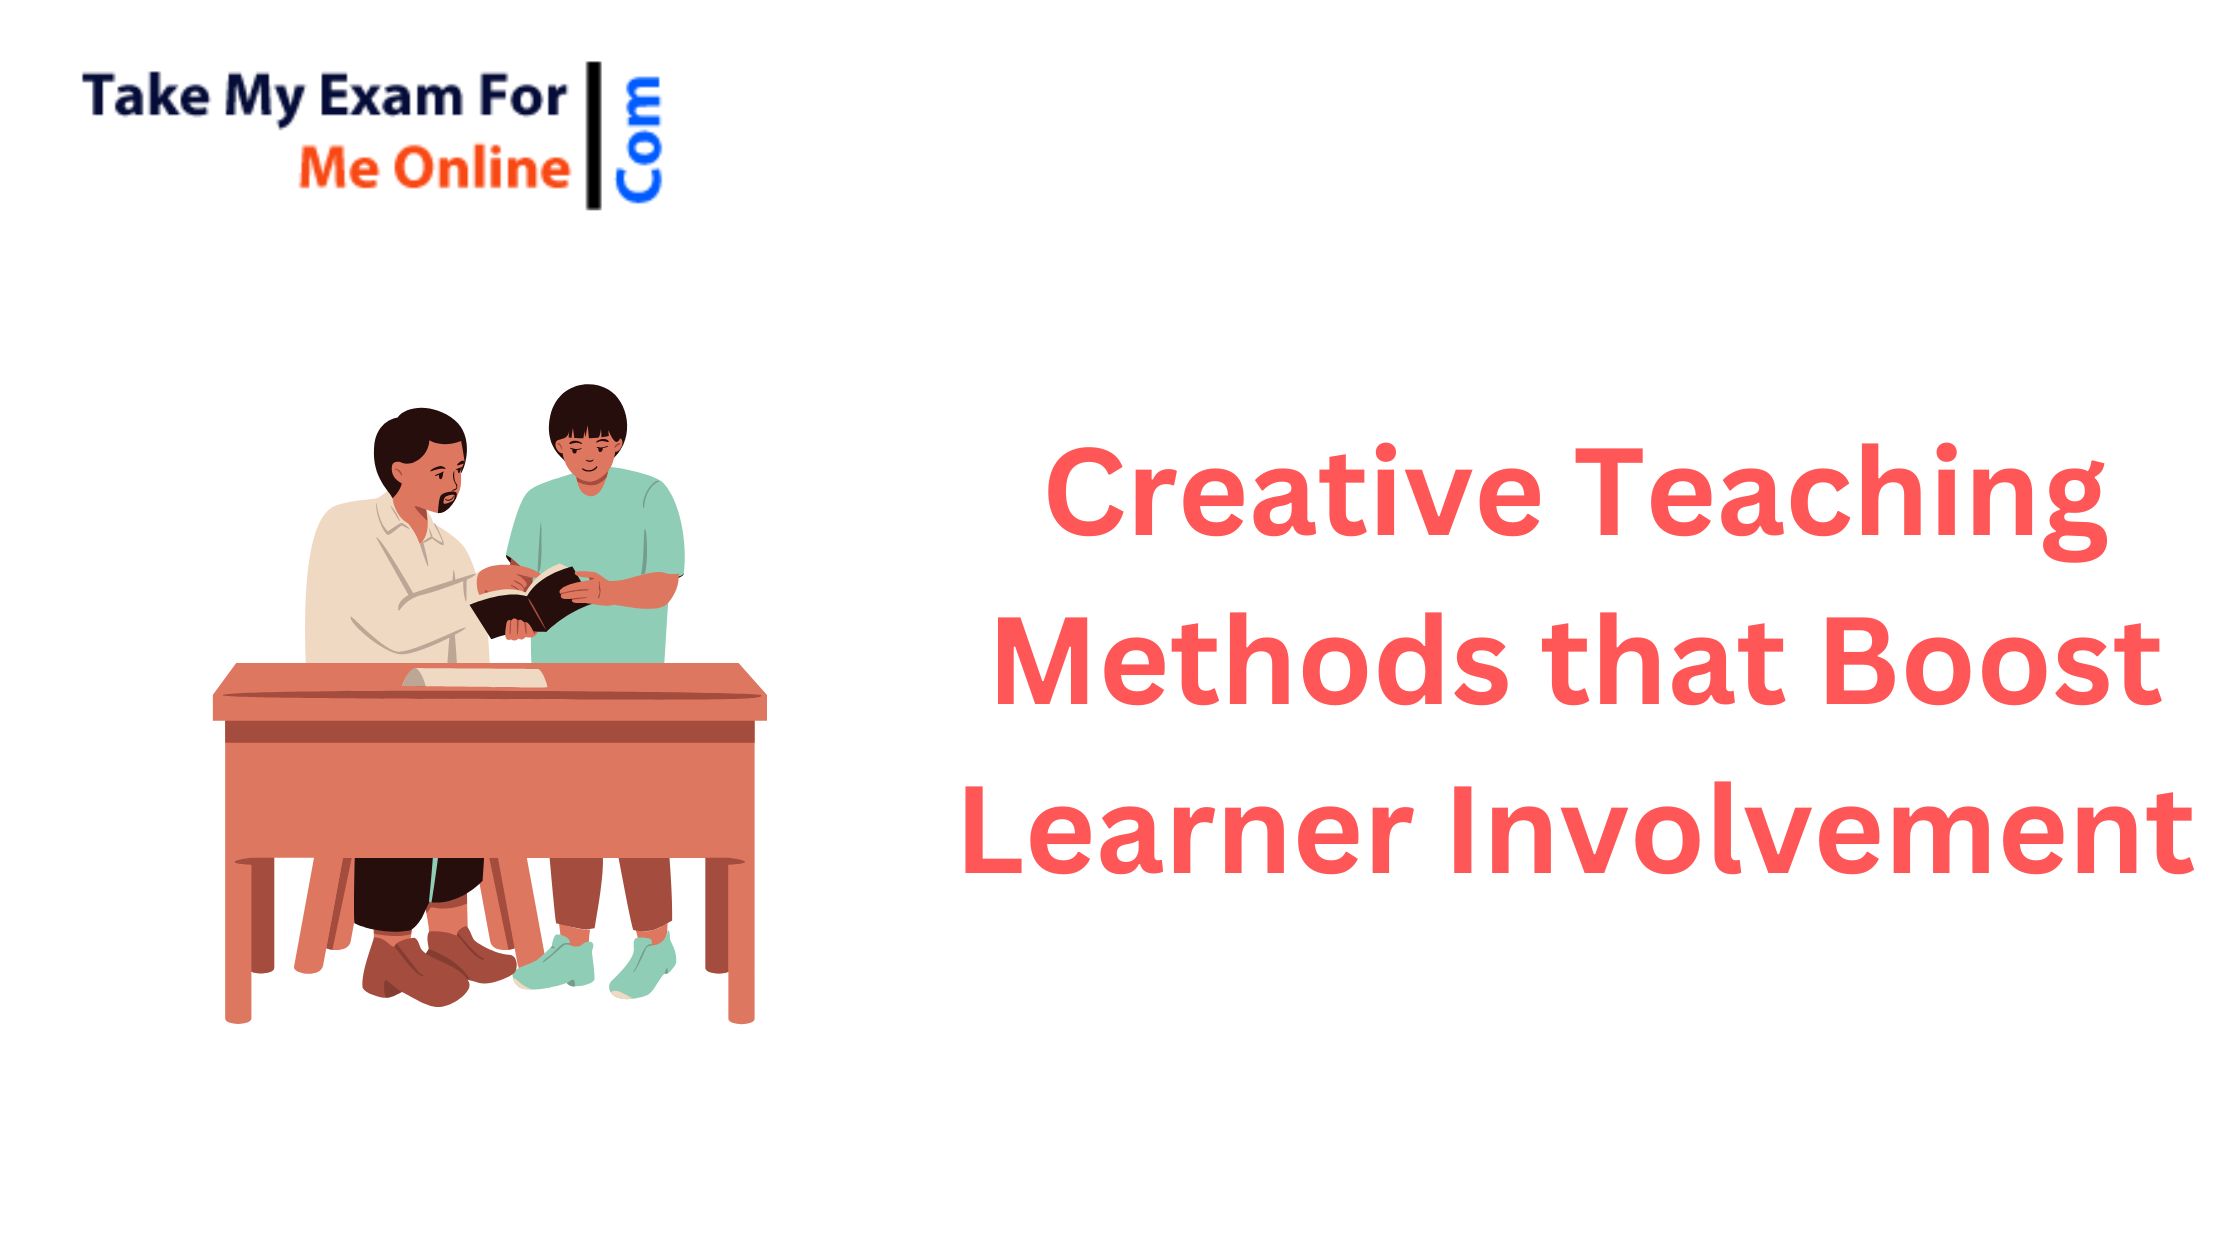 Creative Teaching Methods that Boost Learner Involvement